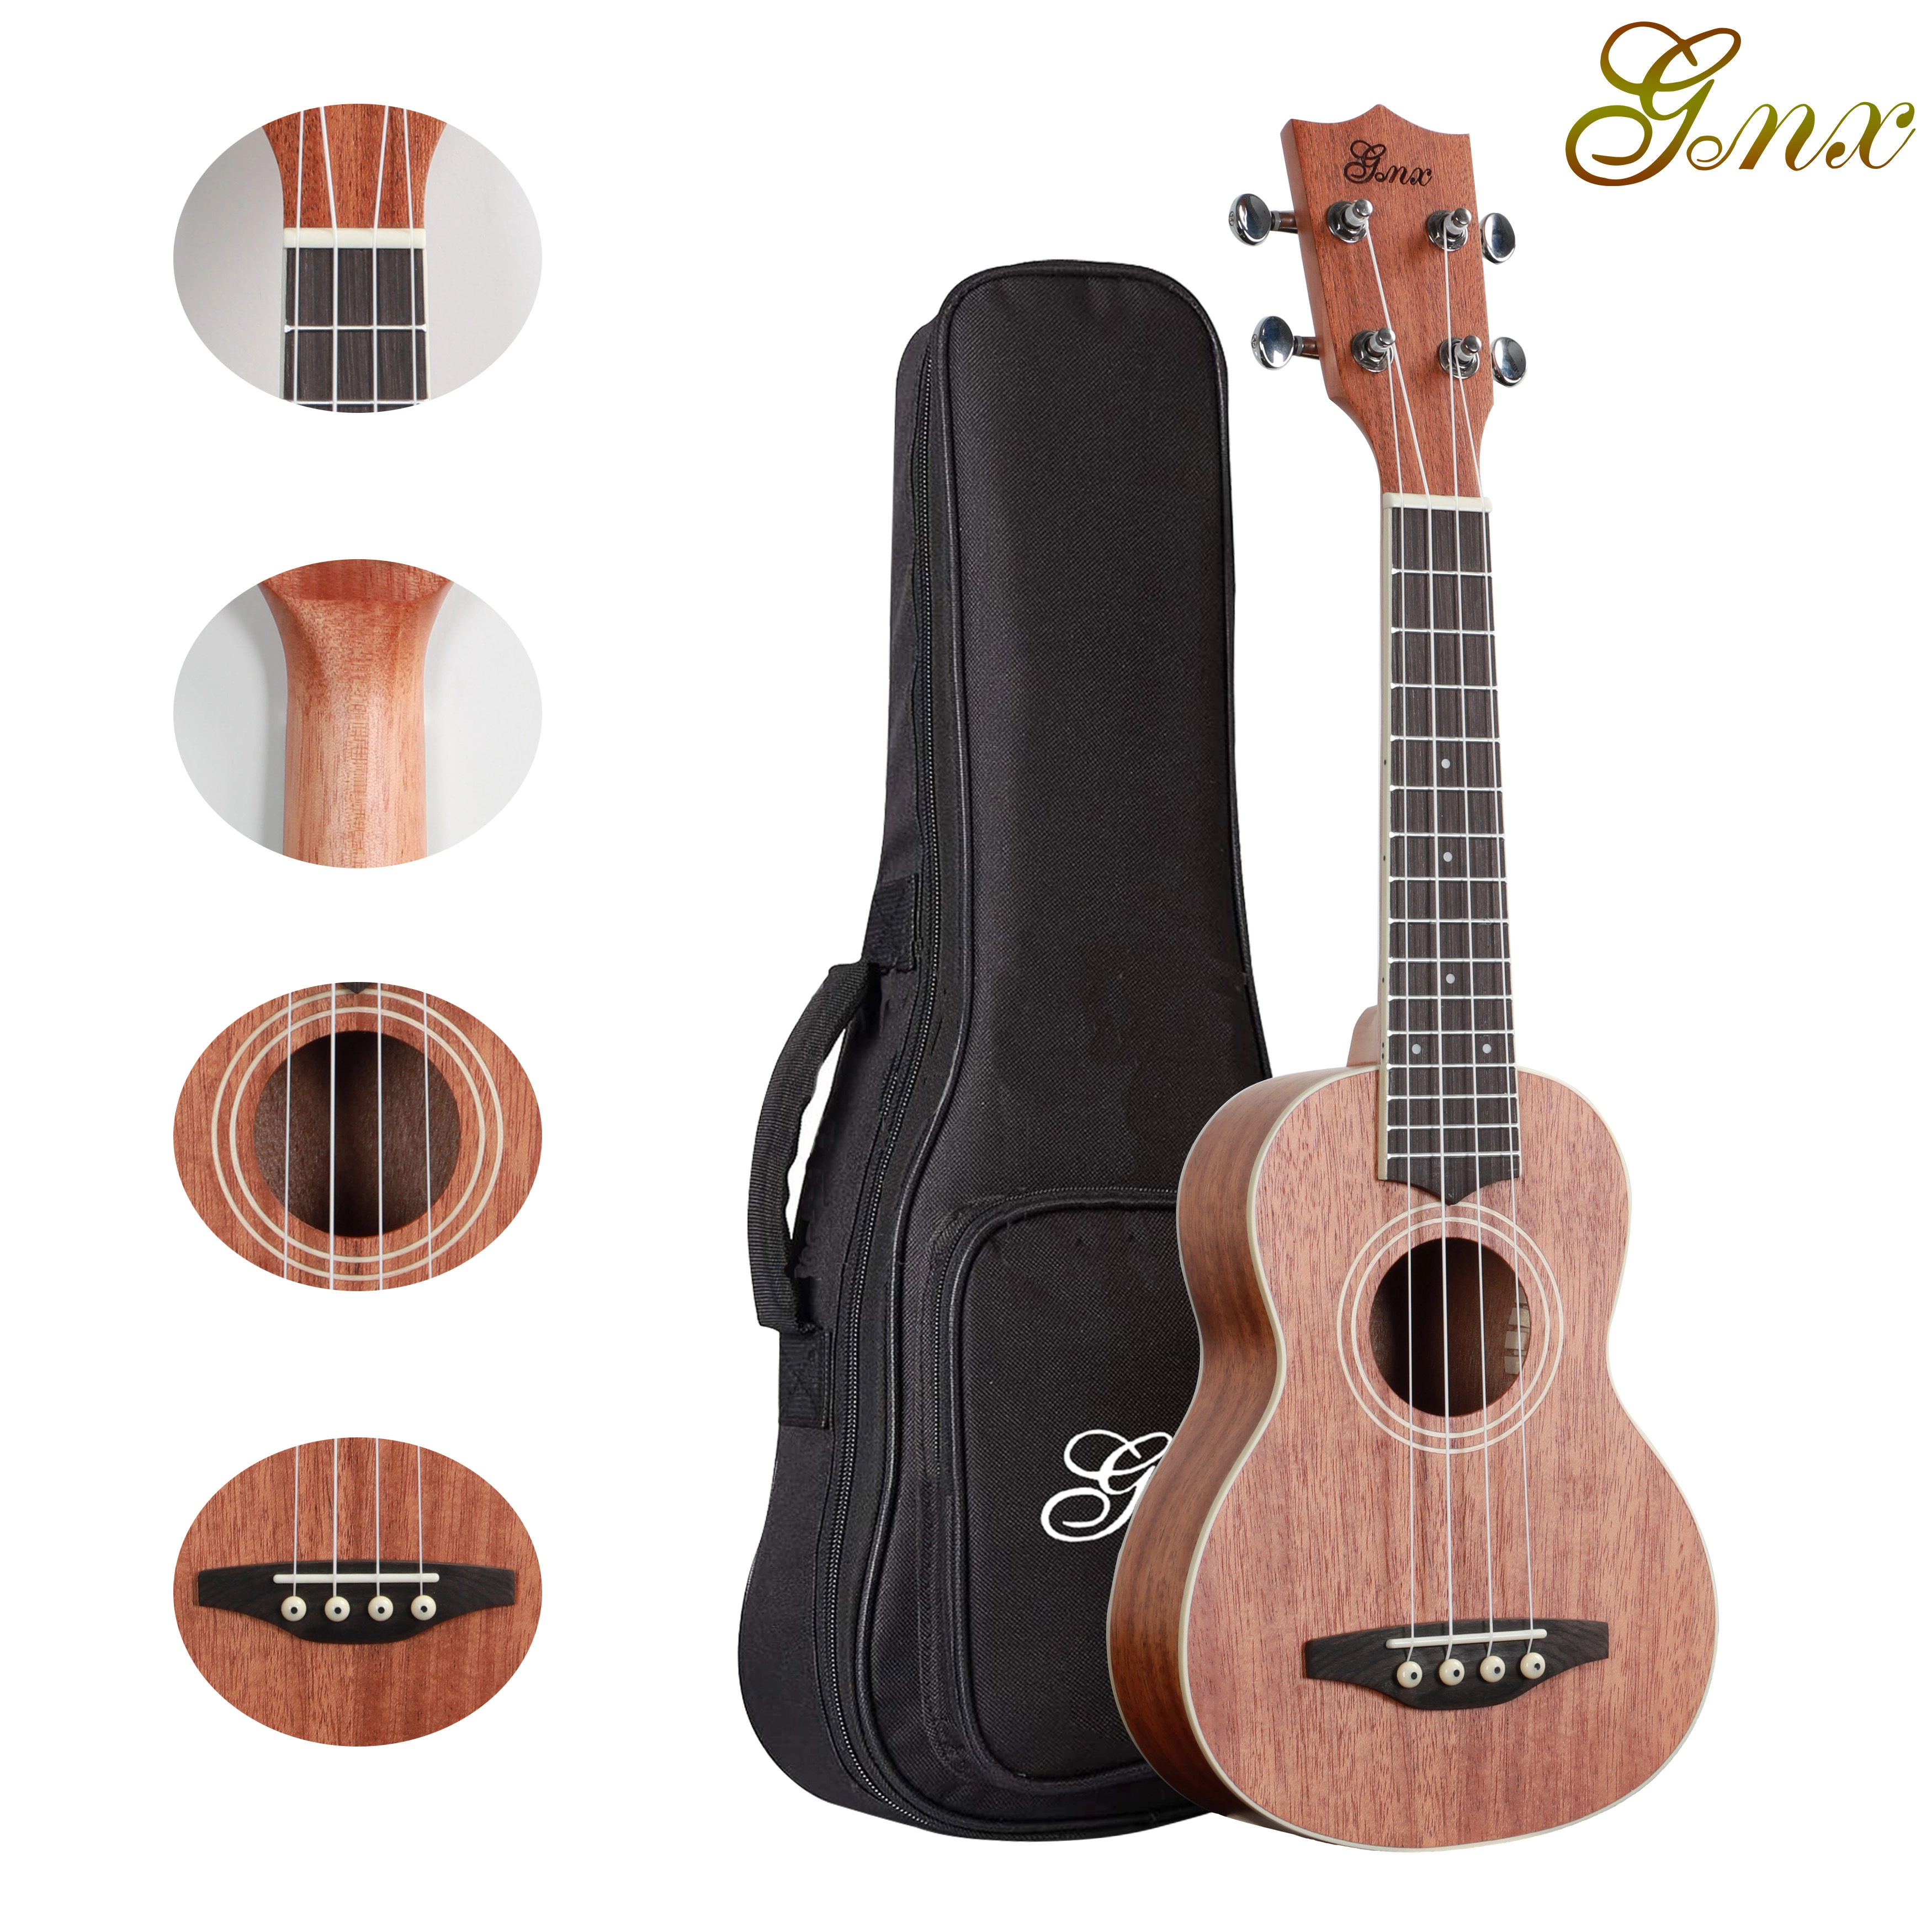 Chine Made in China high quality ukulele of Soprano fabricant